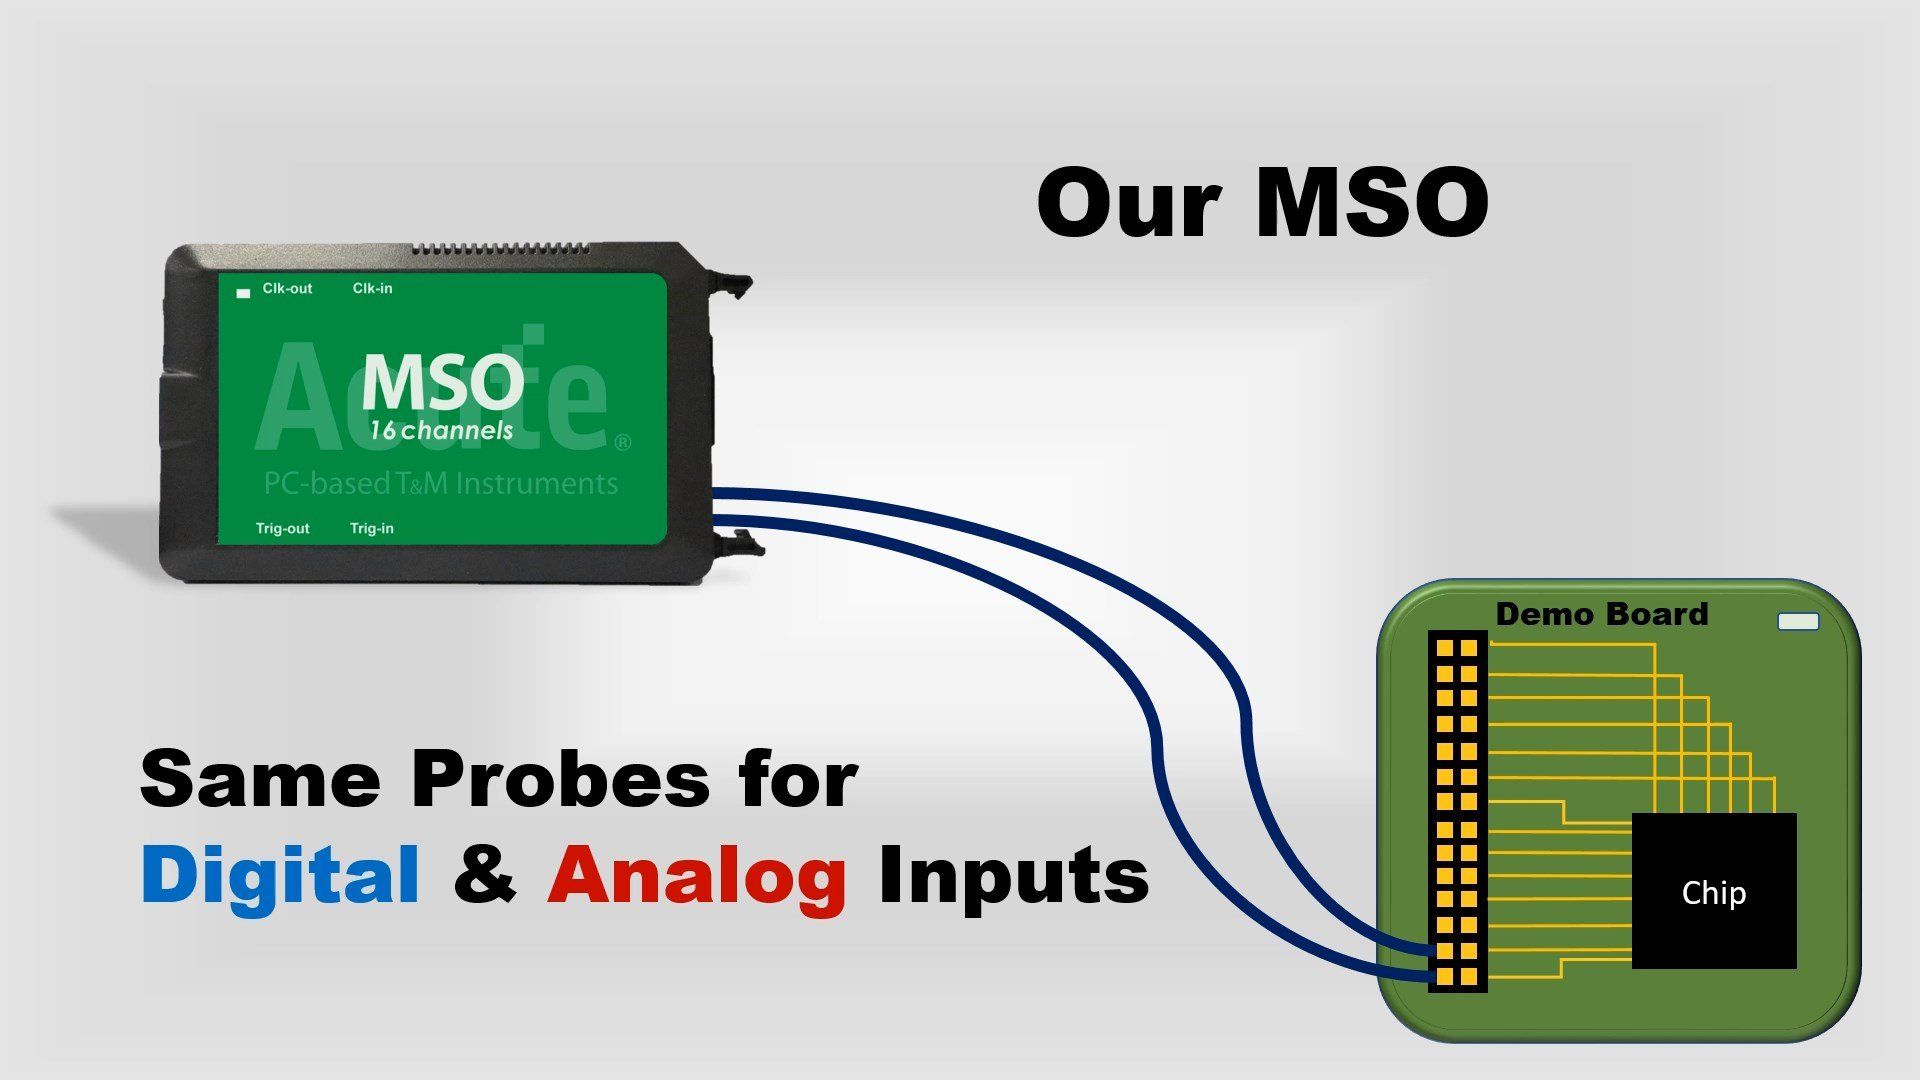 MSO2000 - Mixed-Signal-Oszilloskop - Kanäle können sowohl analoge als auch digitale Signale messen